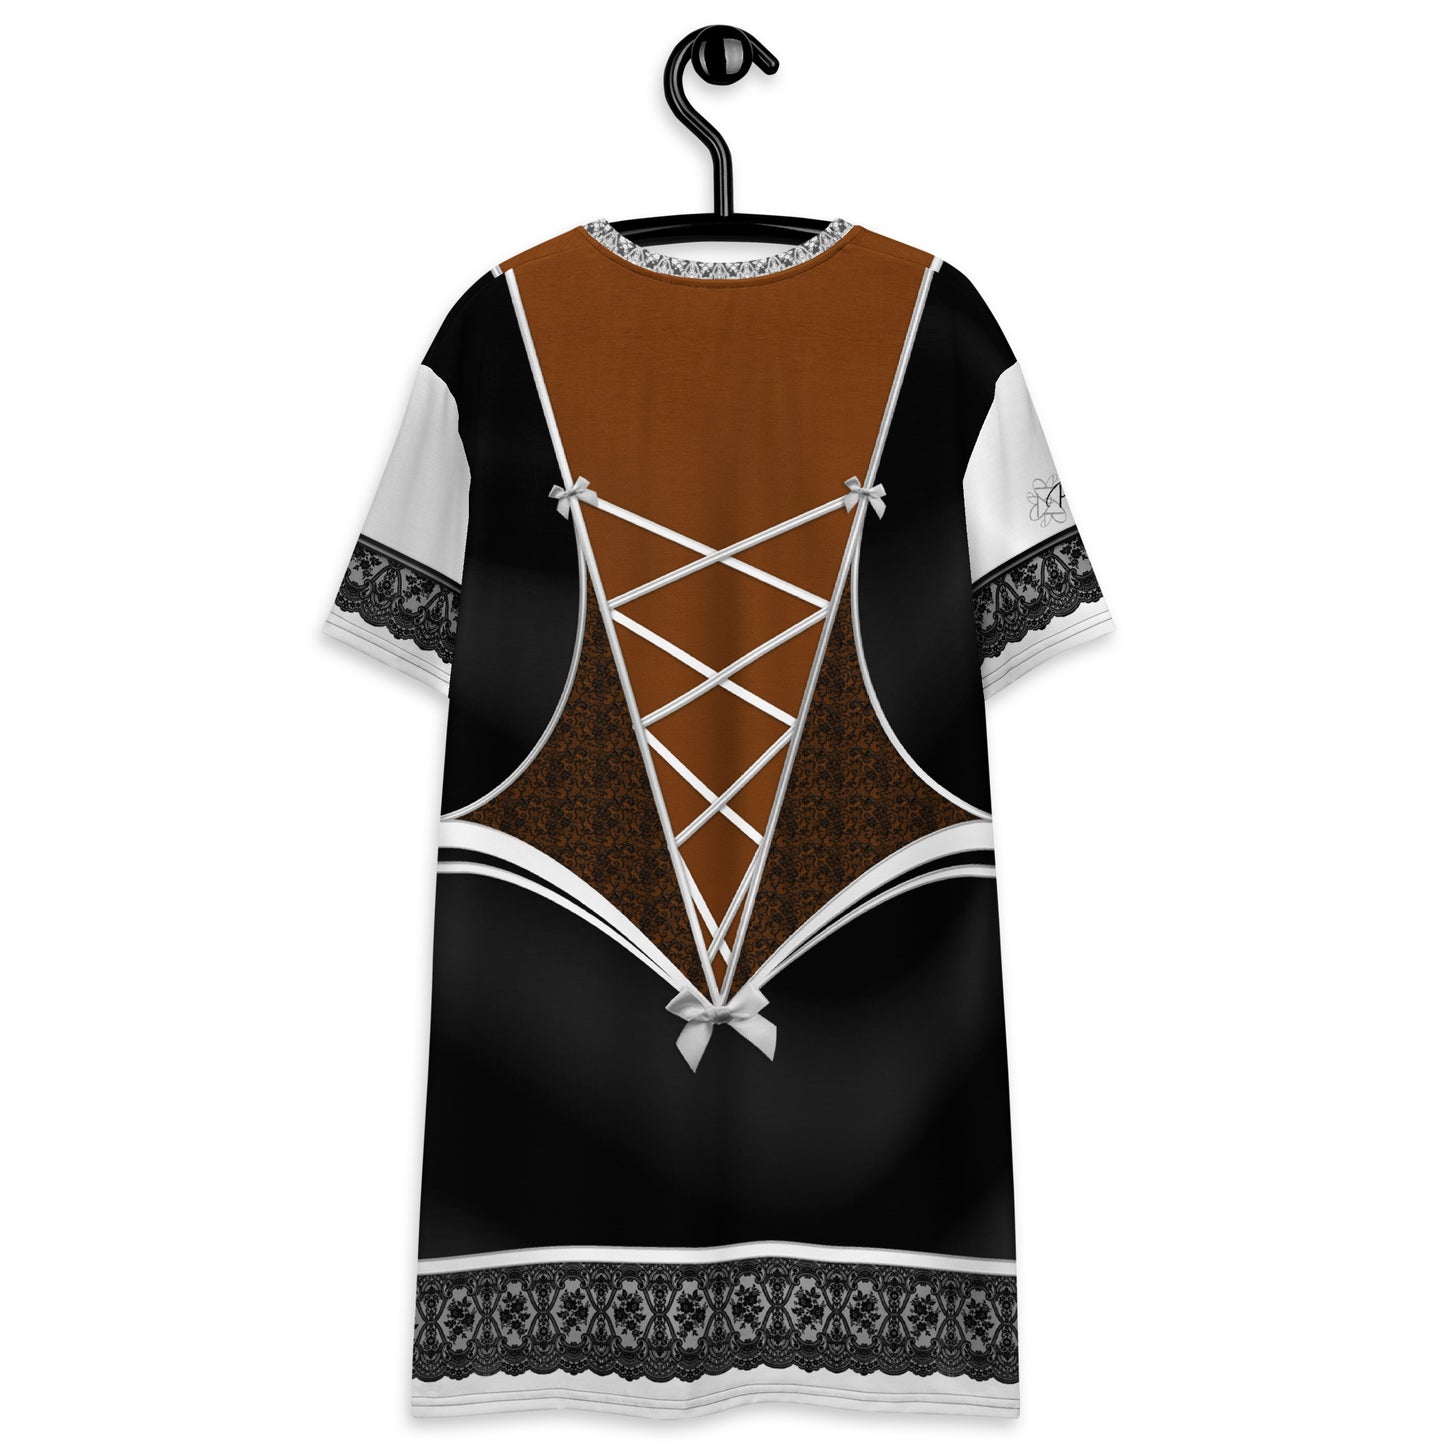 Pajamgeries T-shirt Dress - French Maid - Canela